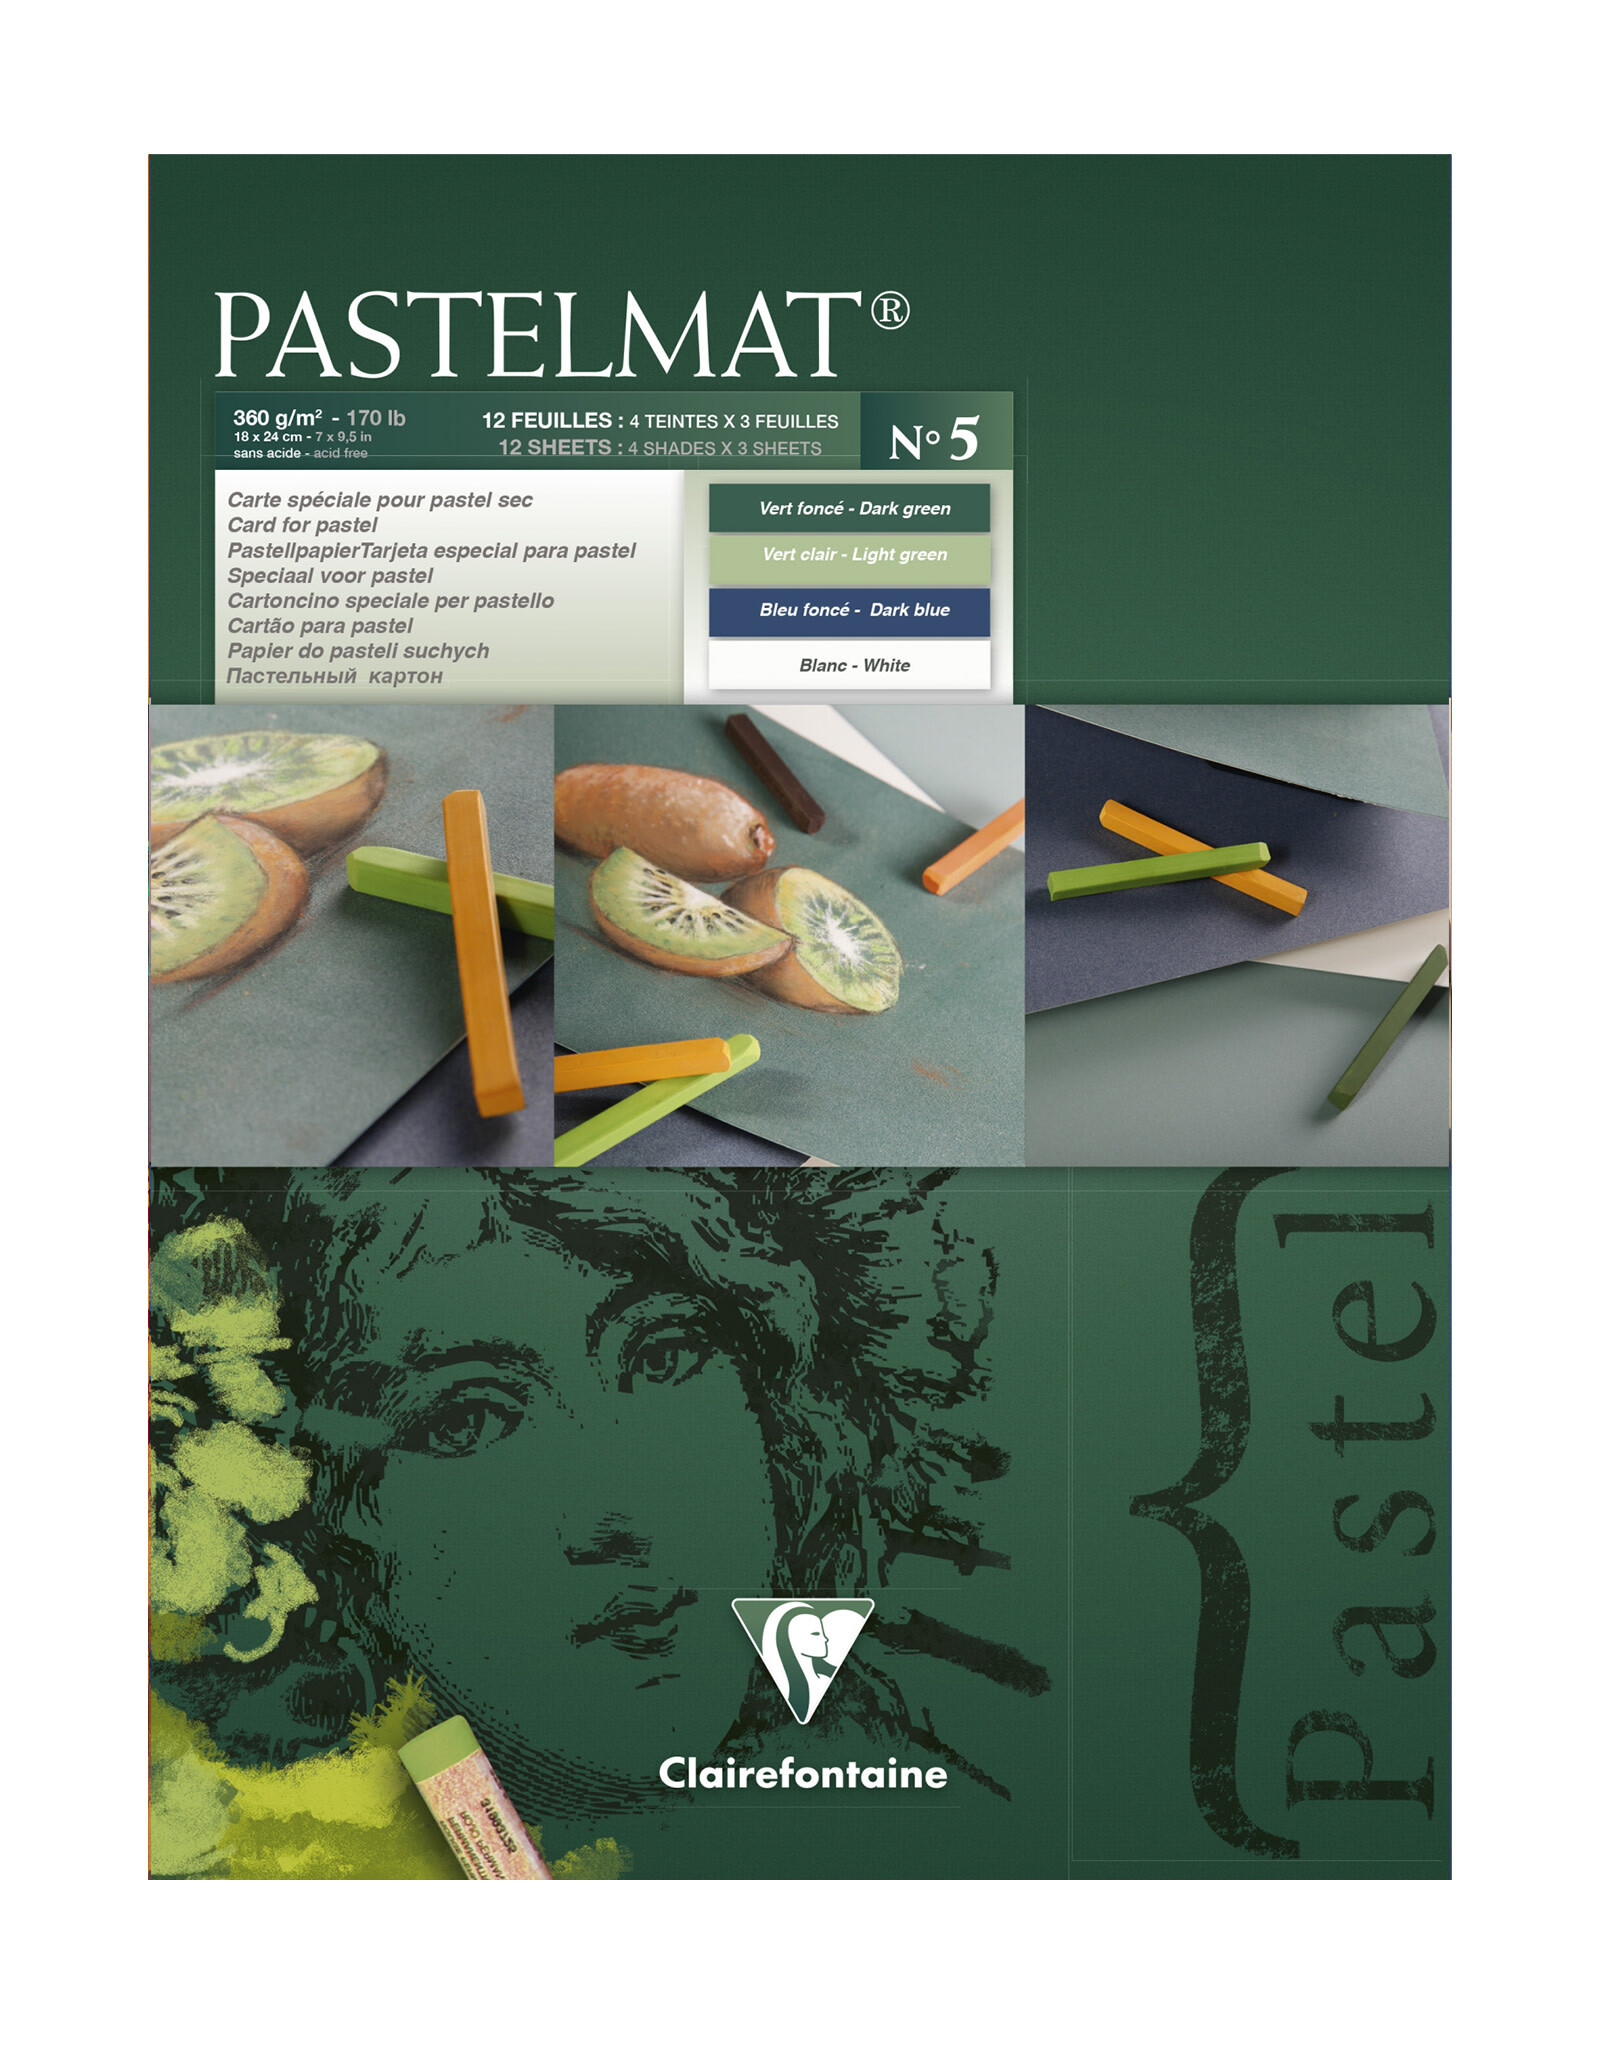 Exaclair Exaclair Pastelmat Pad, 12 sheets, 9 ½” x 11 8/10”, Assorted #5